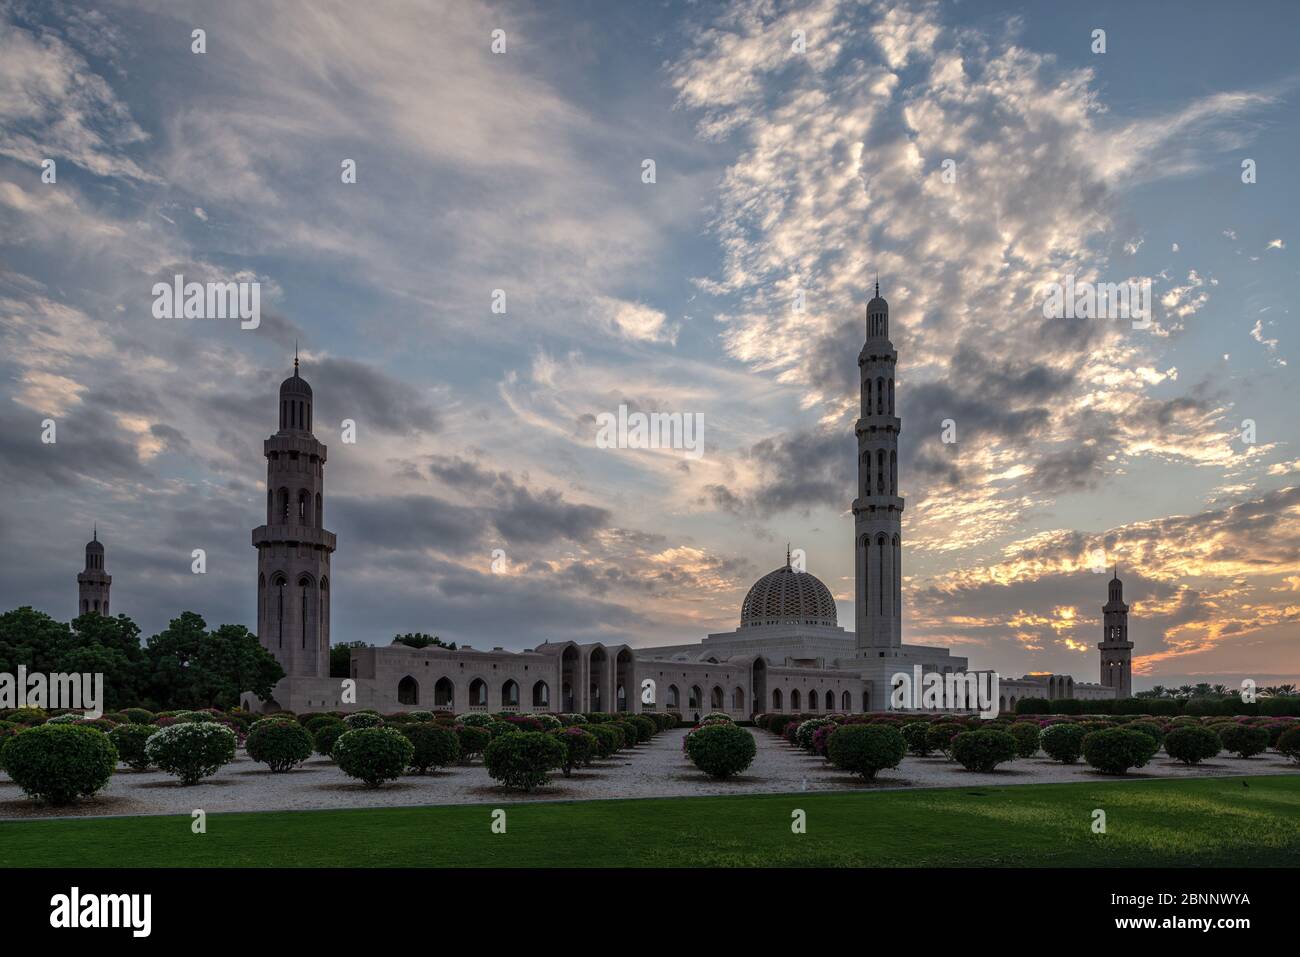 Mosque, house of prayer, dome, minaret, park, garden, dusk, evening sky, clouds, cloudscape, trees Stock Photo